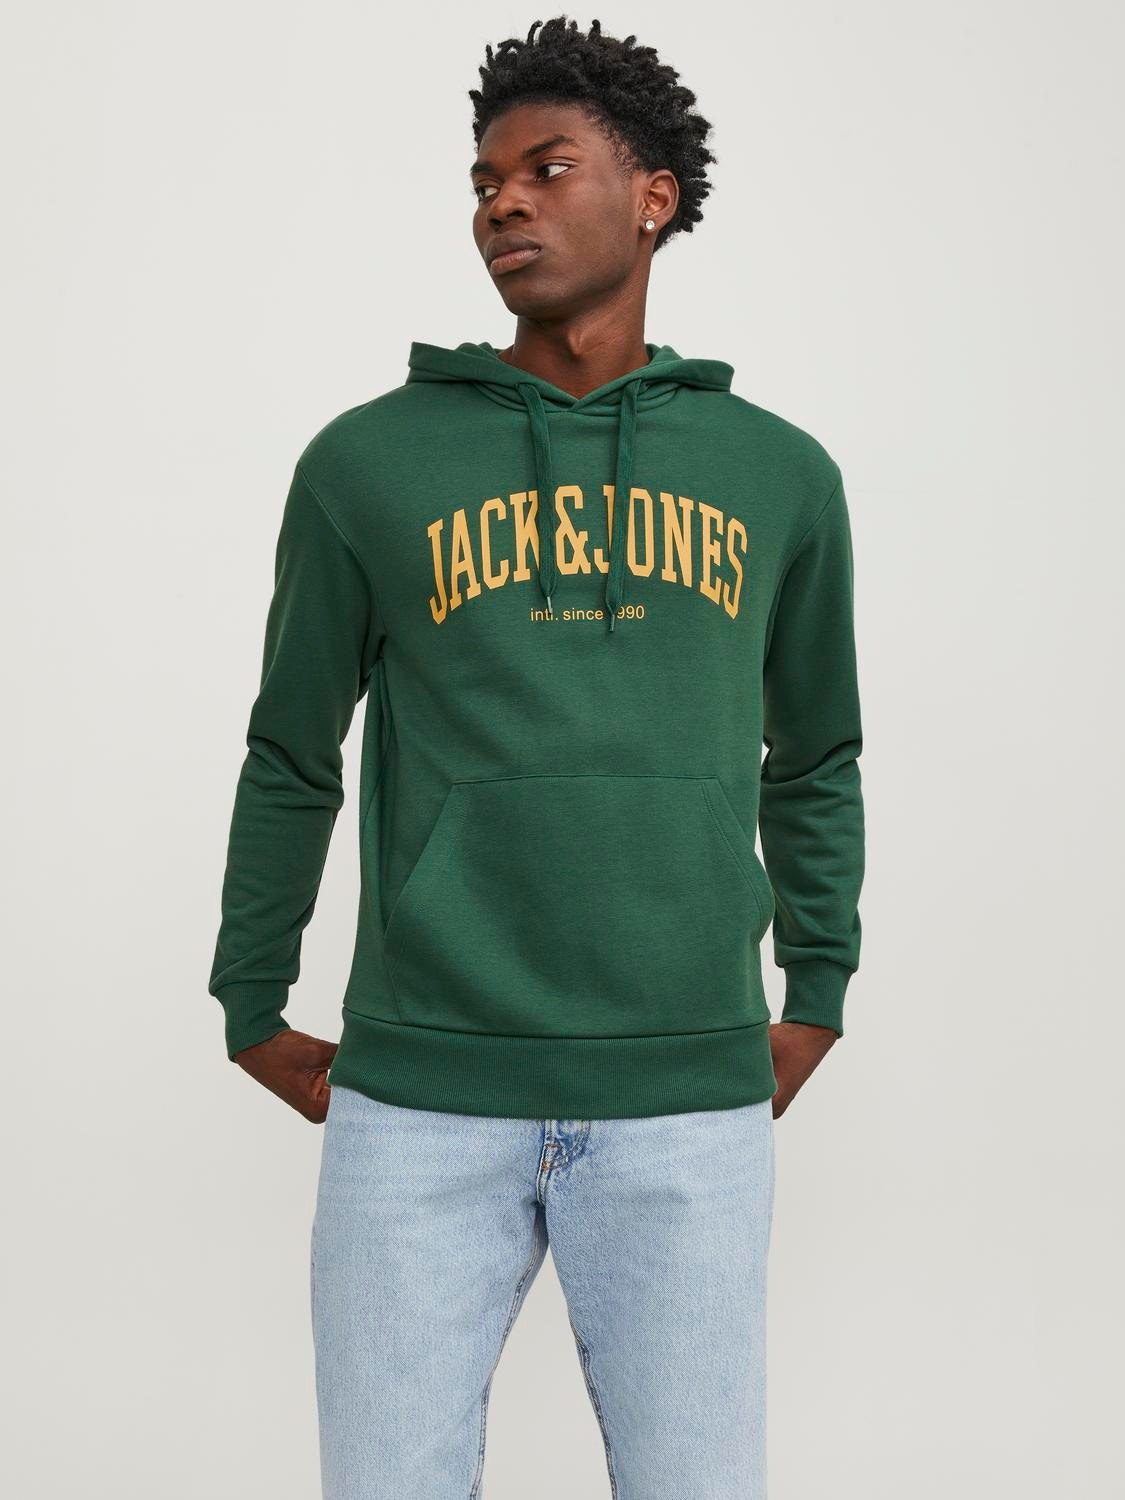 Jack & Jones Hoodie Logo -Dark Green - 12236513